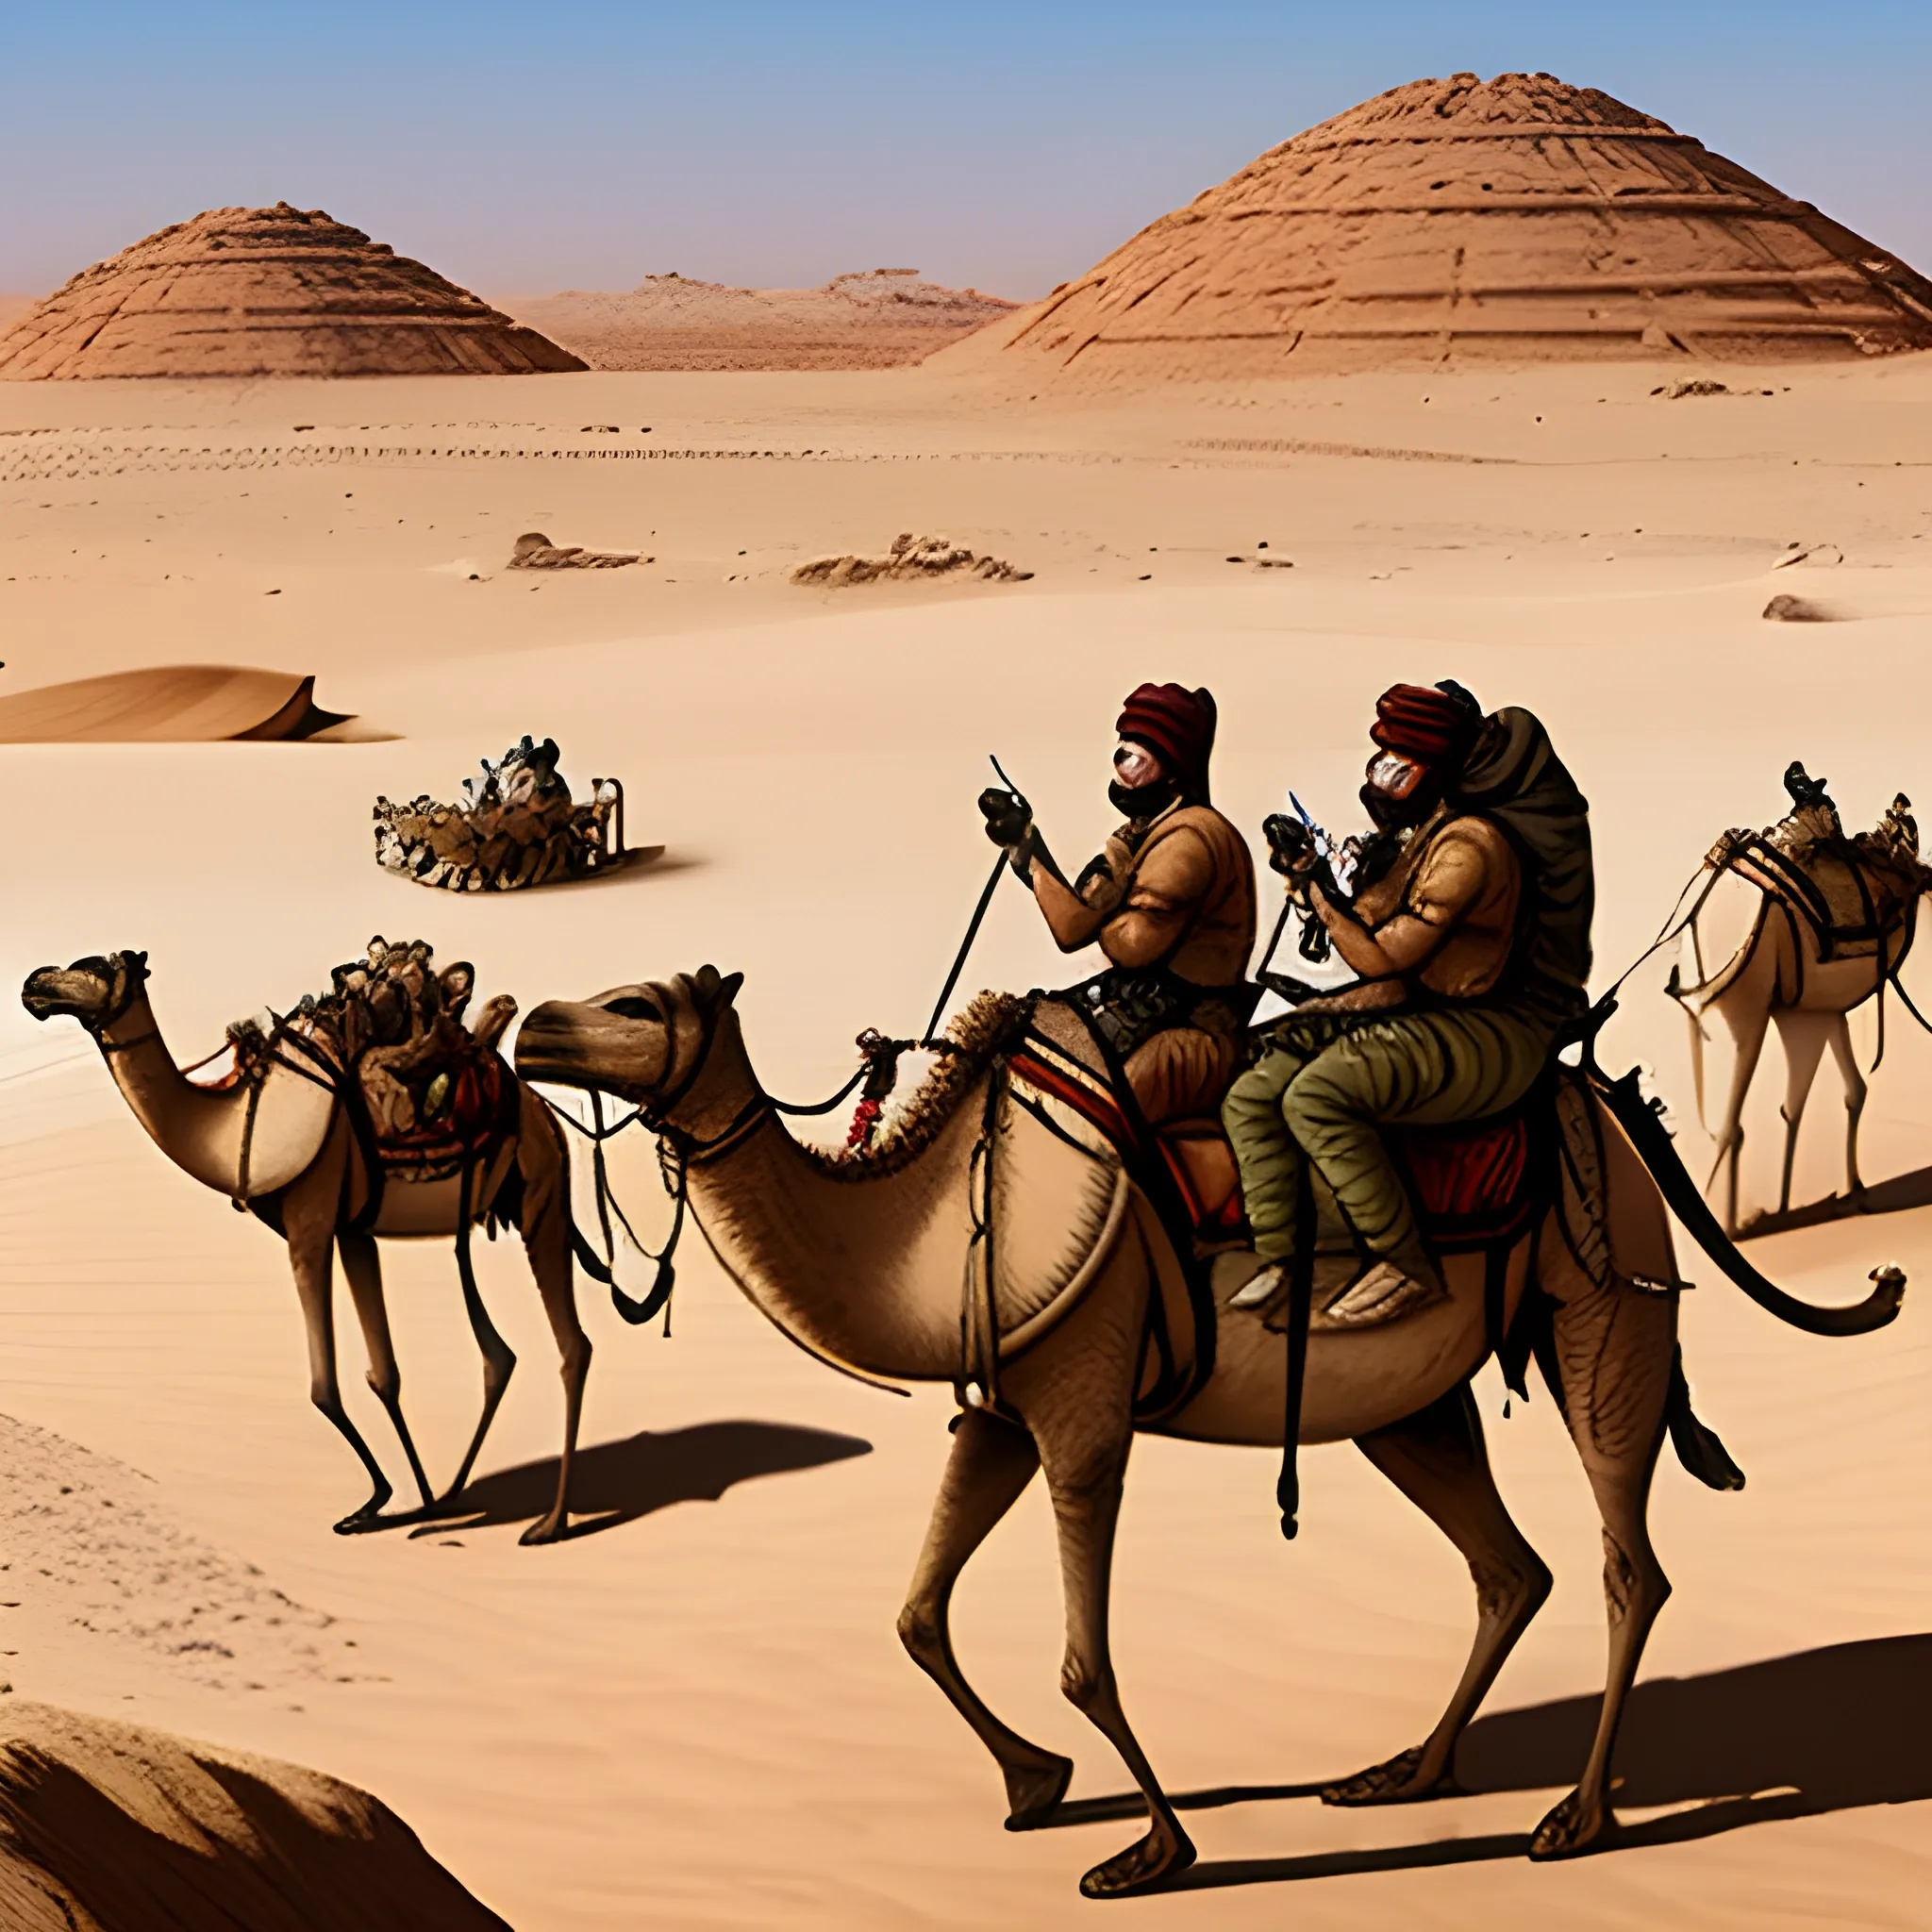 yemini raidres on camels with rifles, Cartoon